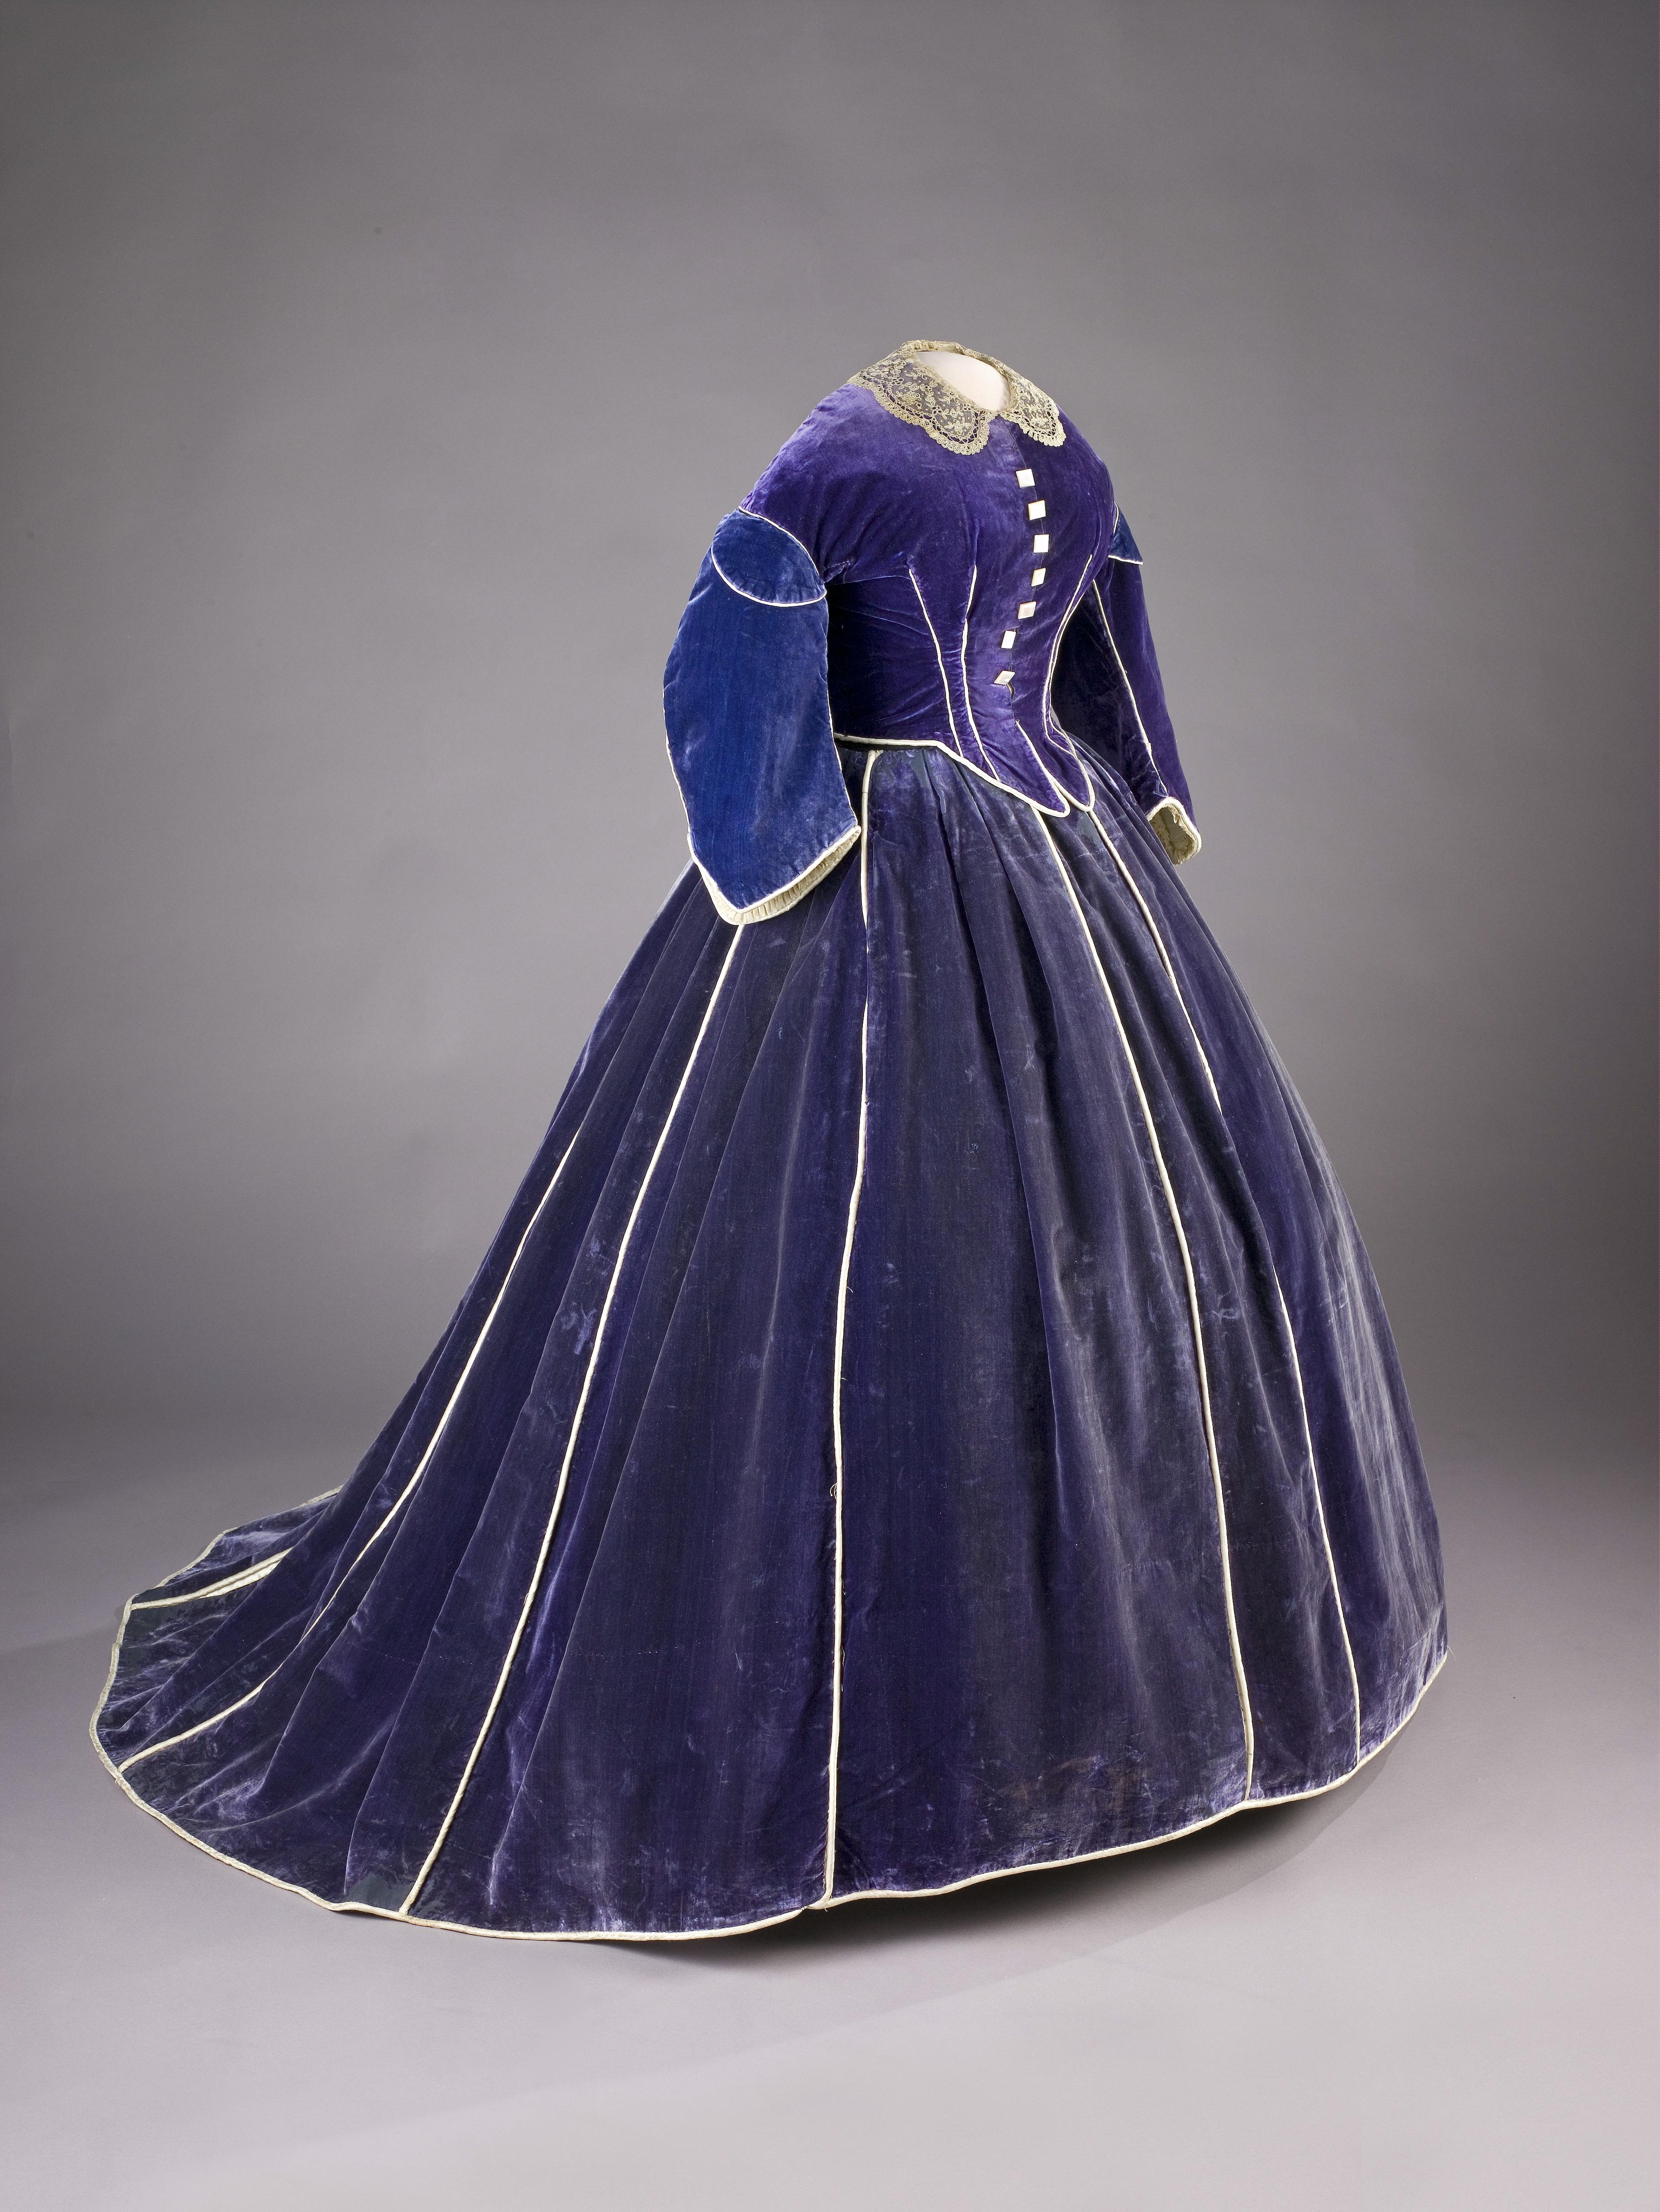 Half-profile photo of a floor-length blue velvet gown on a dressmaker's mannequin